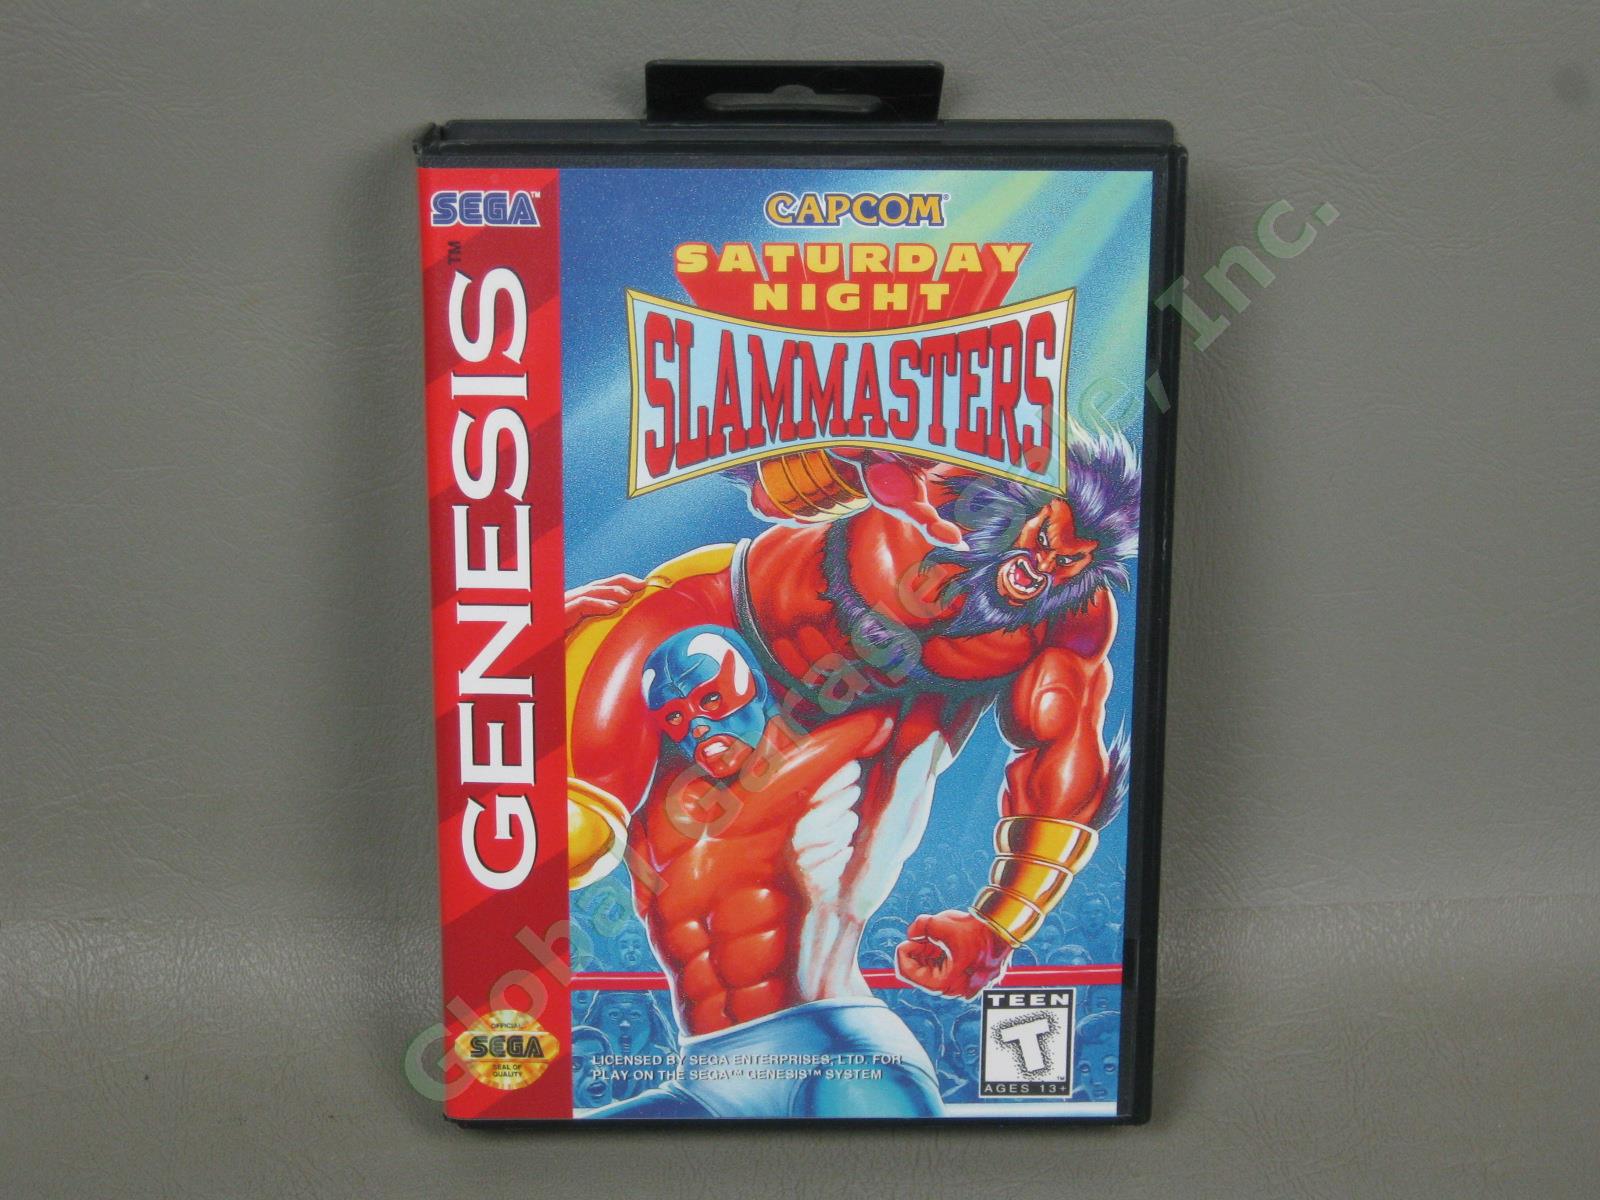 Sega Genesis Game Capcom Saturday Night Slammasters Complete CIB W/ Manual + Box